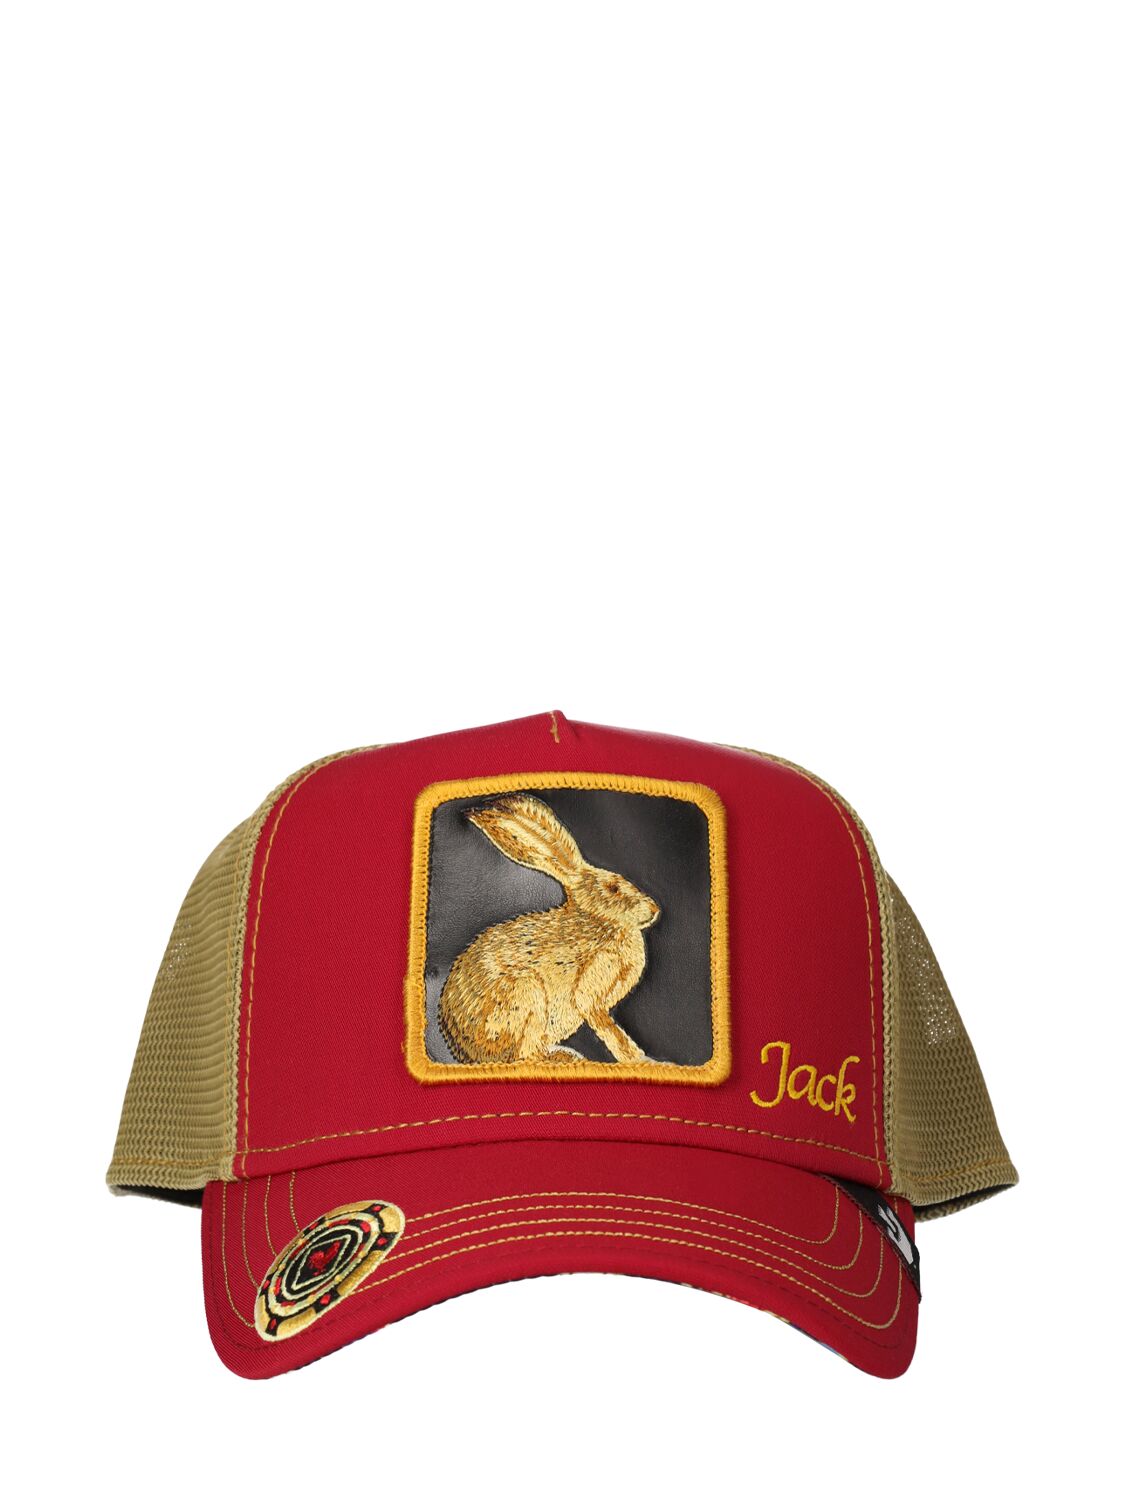 Image of Jacked Trucker Hat